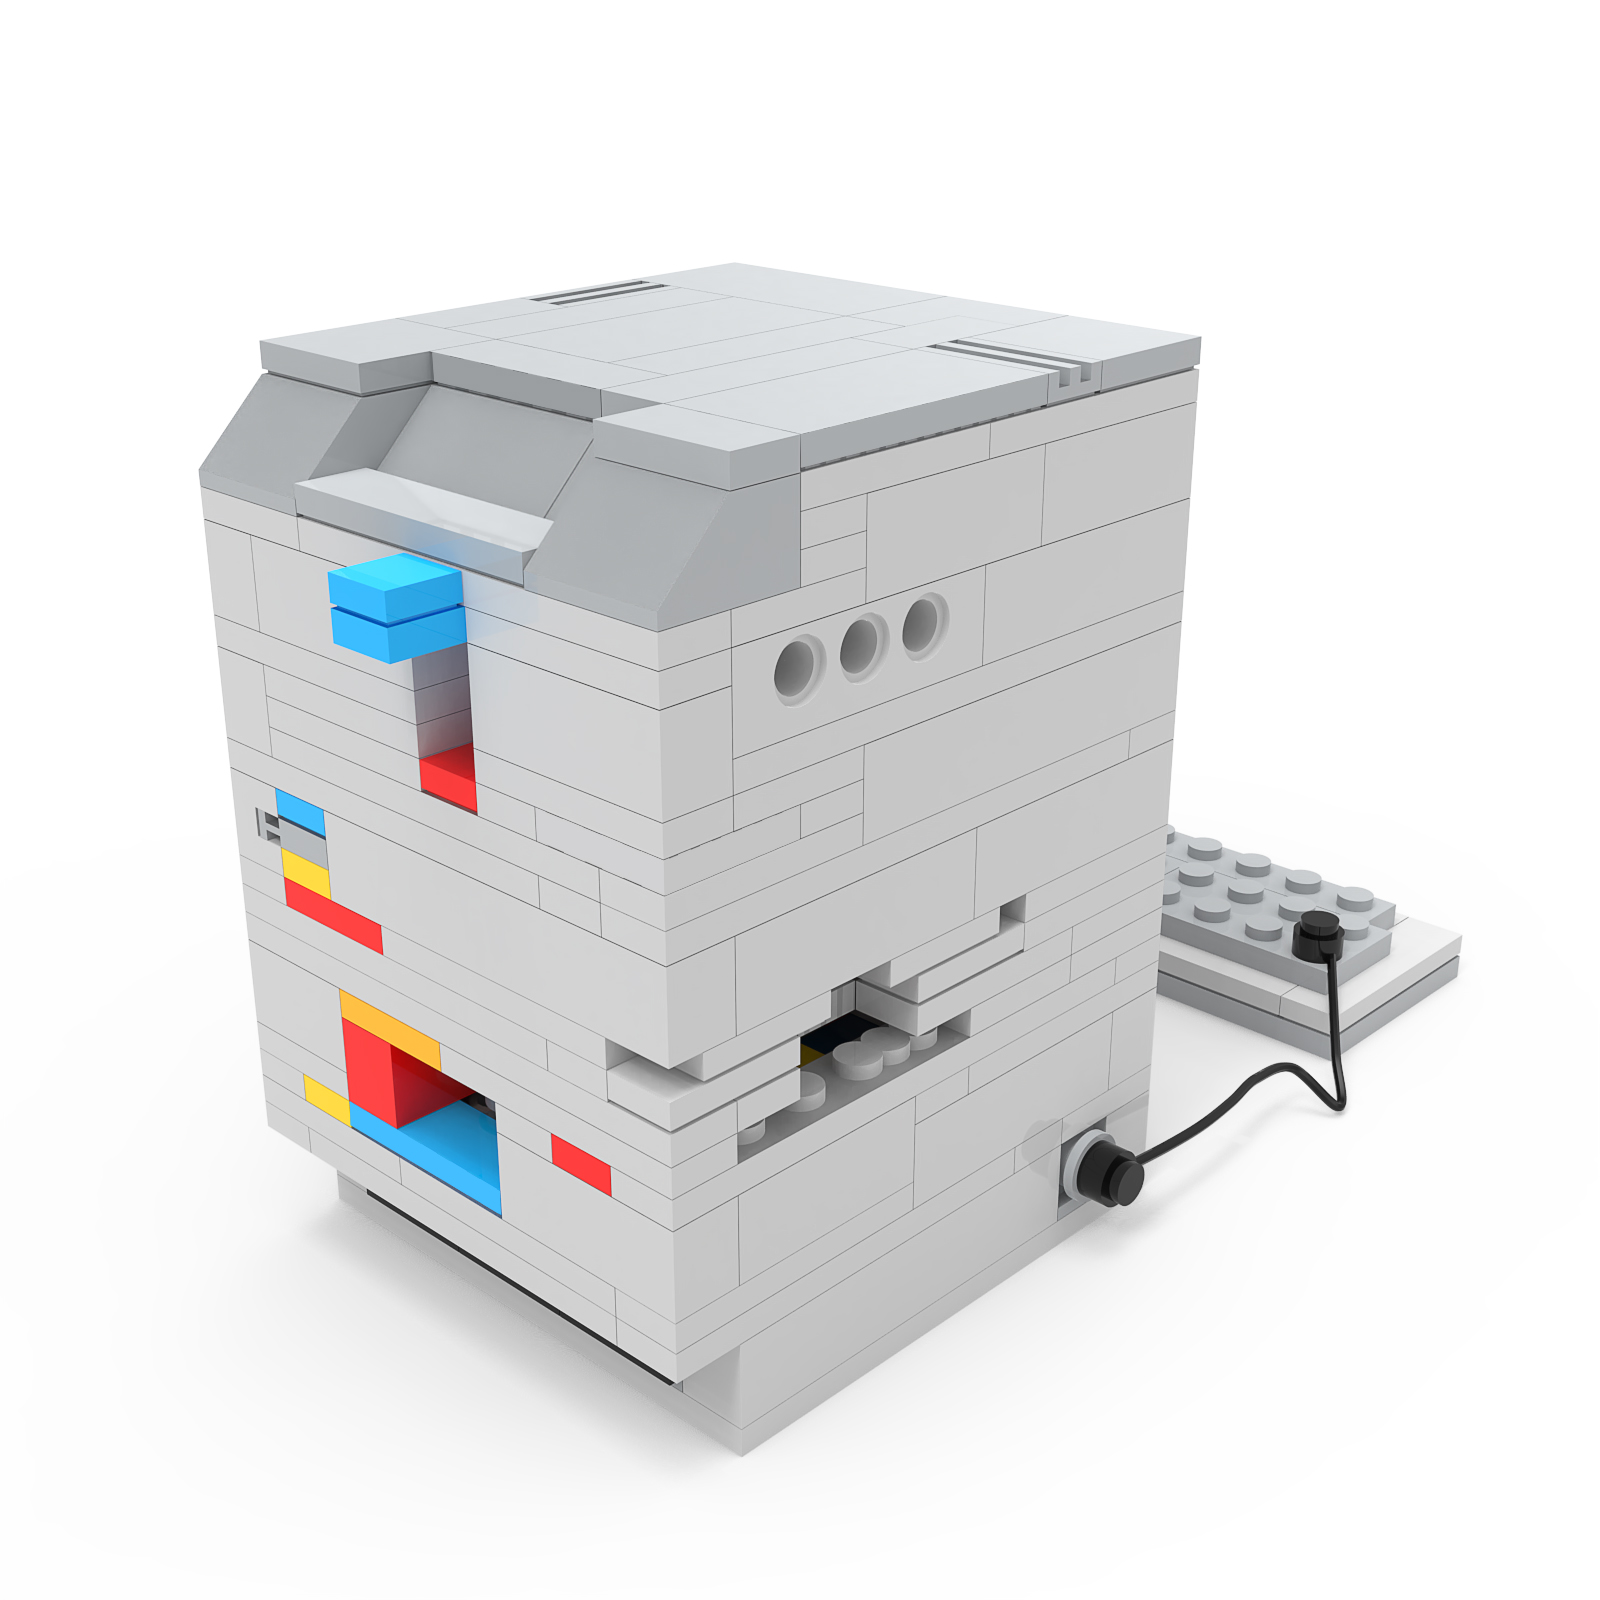 LEGO MOC The Classic Box - Puzzle by legolamaniac